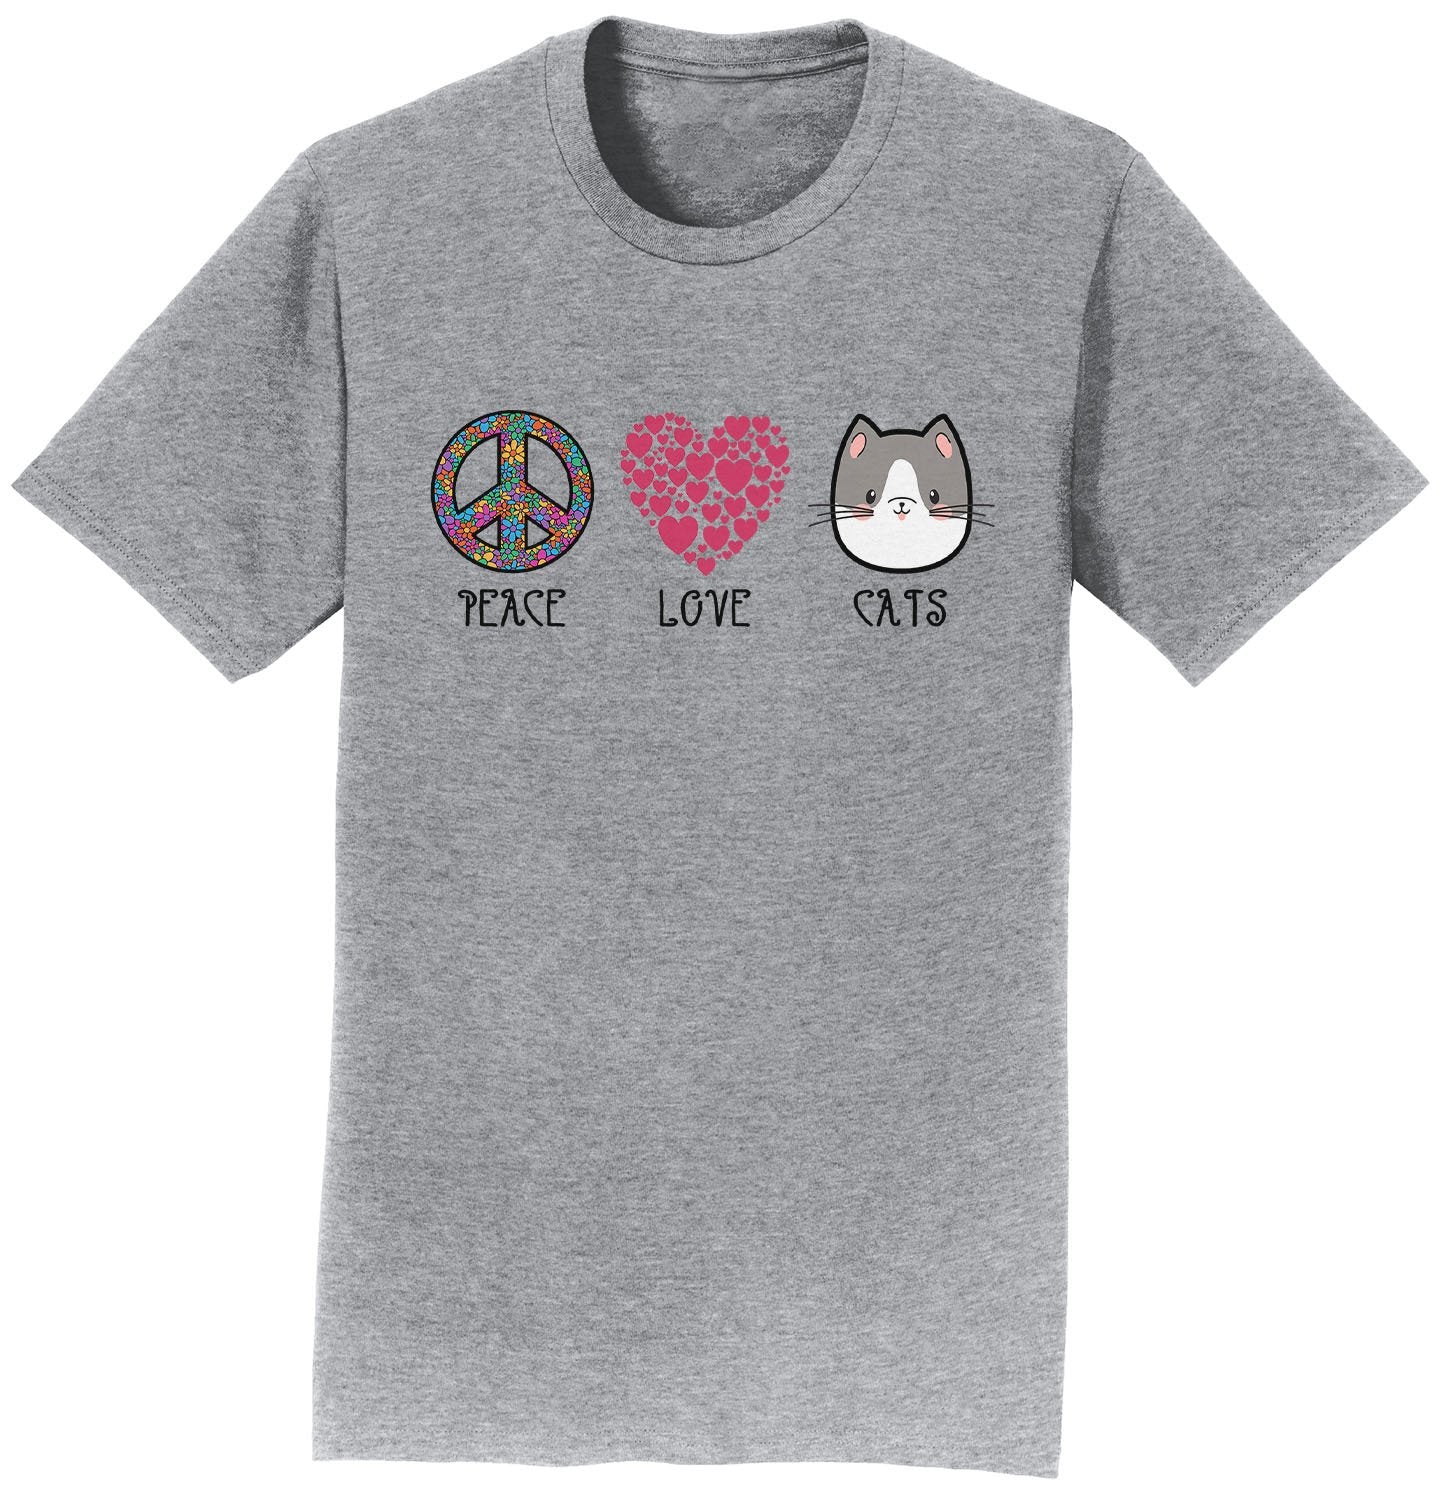 Peace Love Cats - Adult Unisex T-Shirt